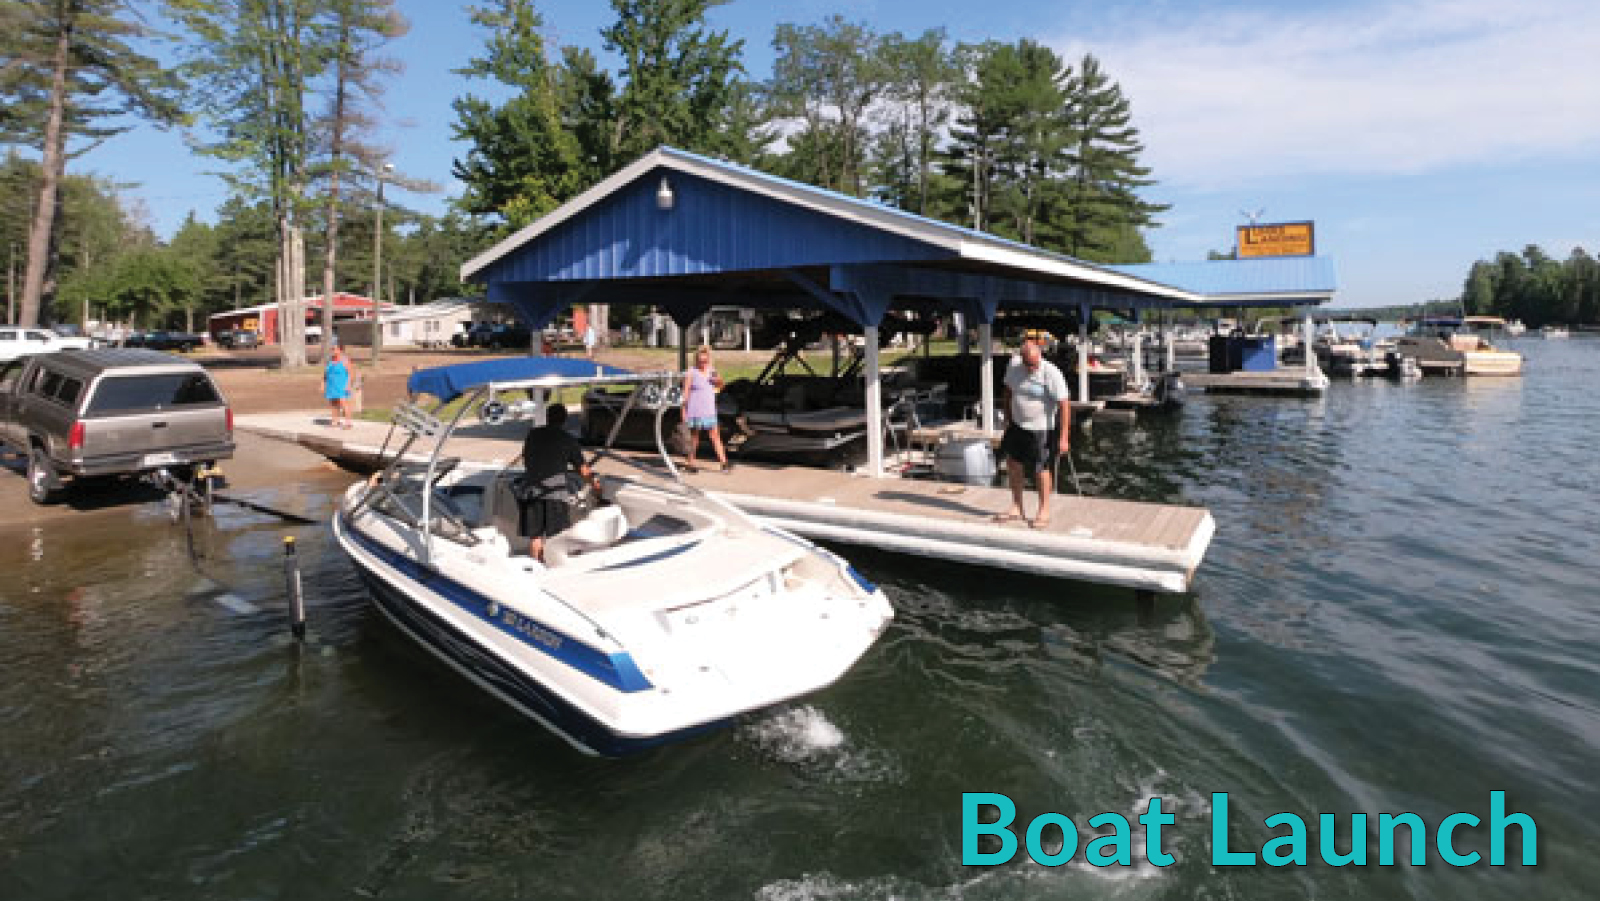 Boat launch on Torch lake Michigan